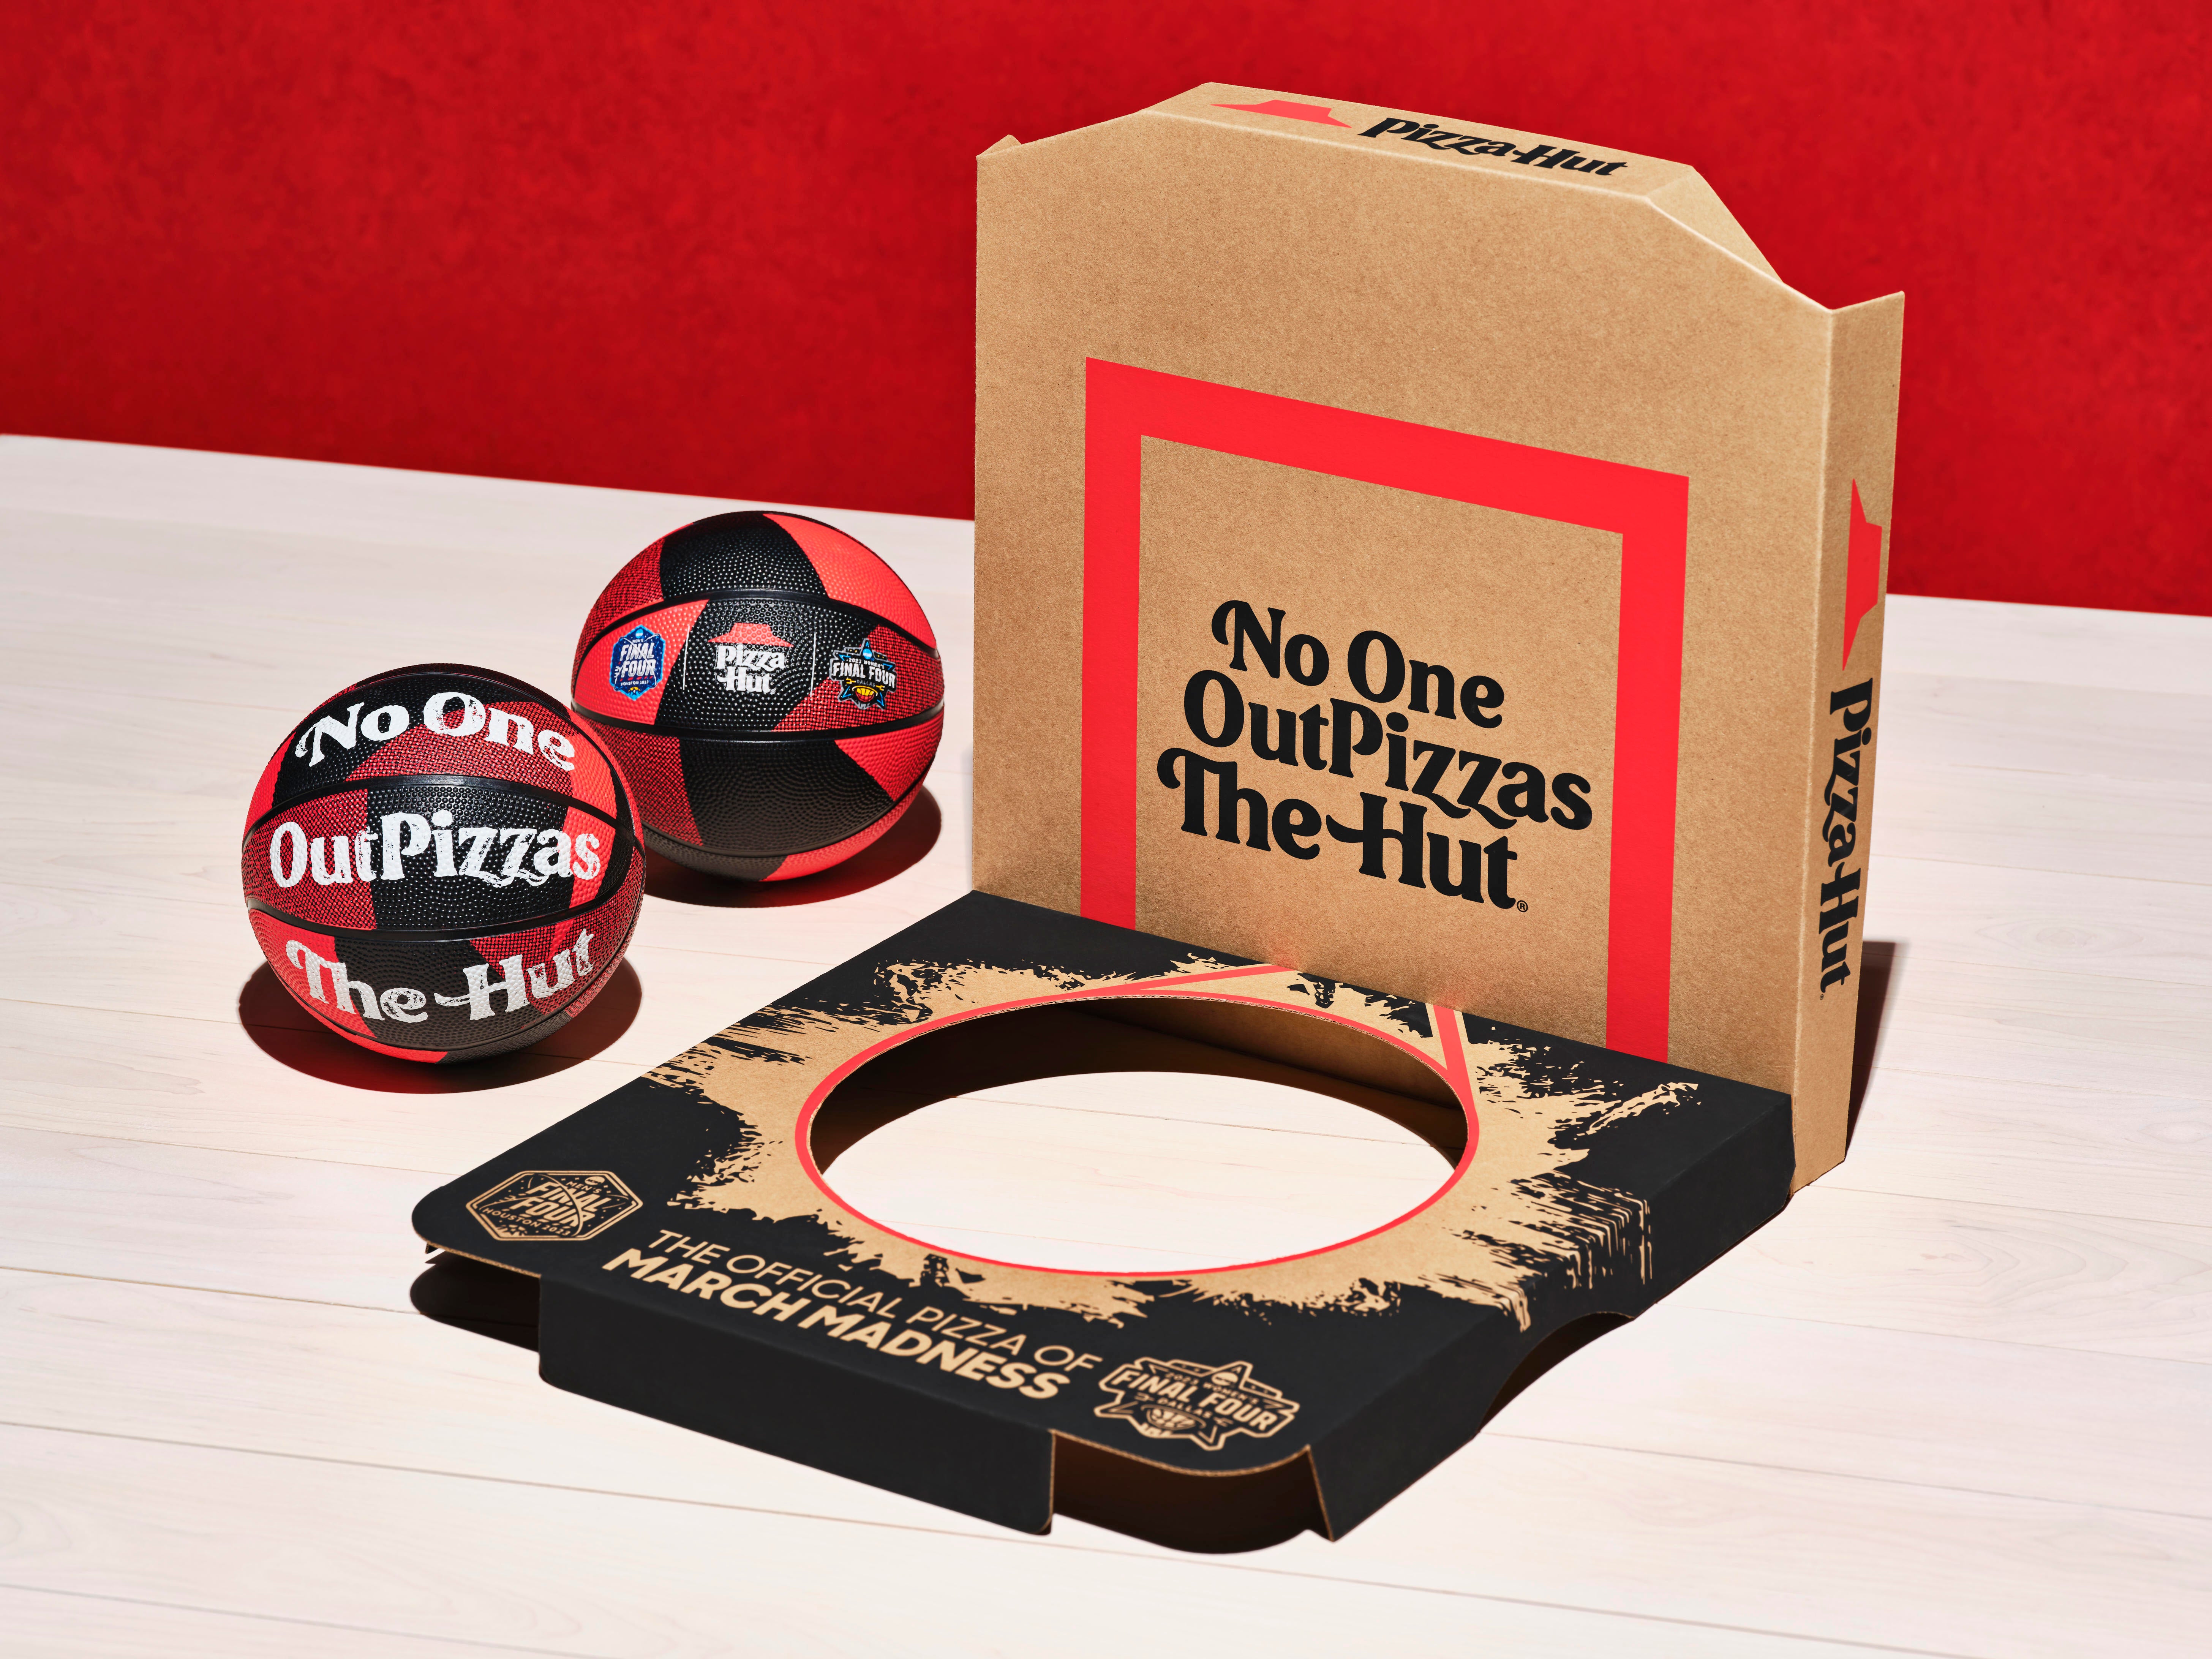 pizza-hut-mini-basketballs-big-new-yorker-march-madness-box-2